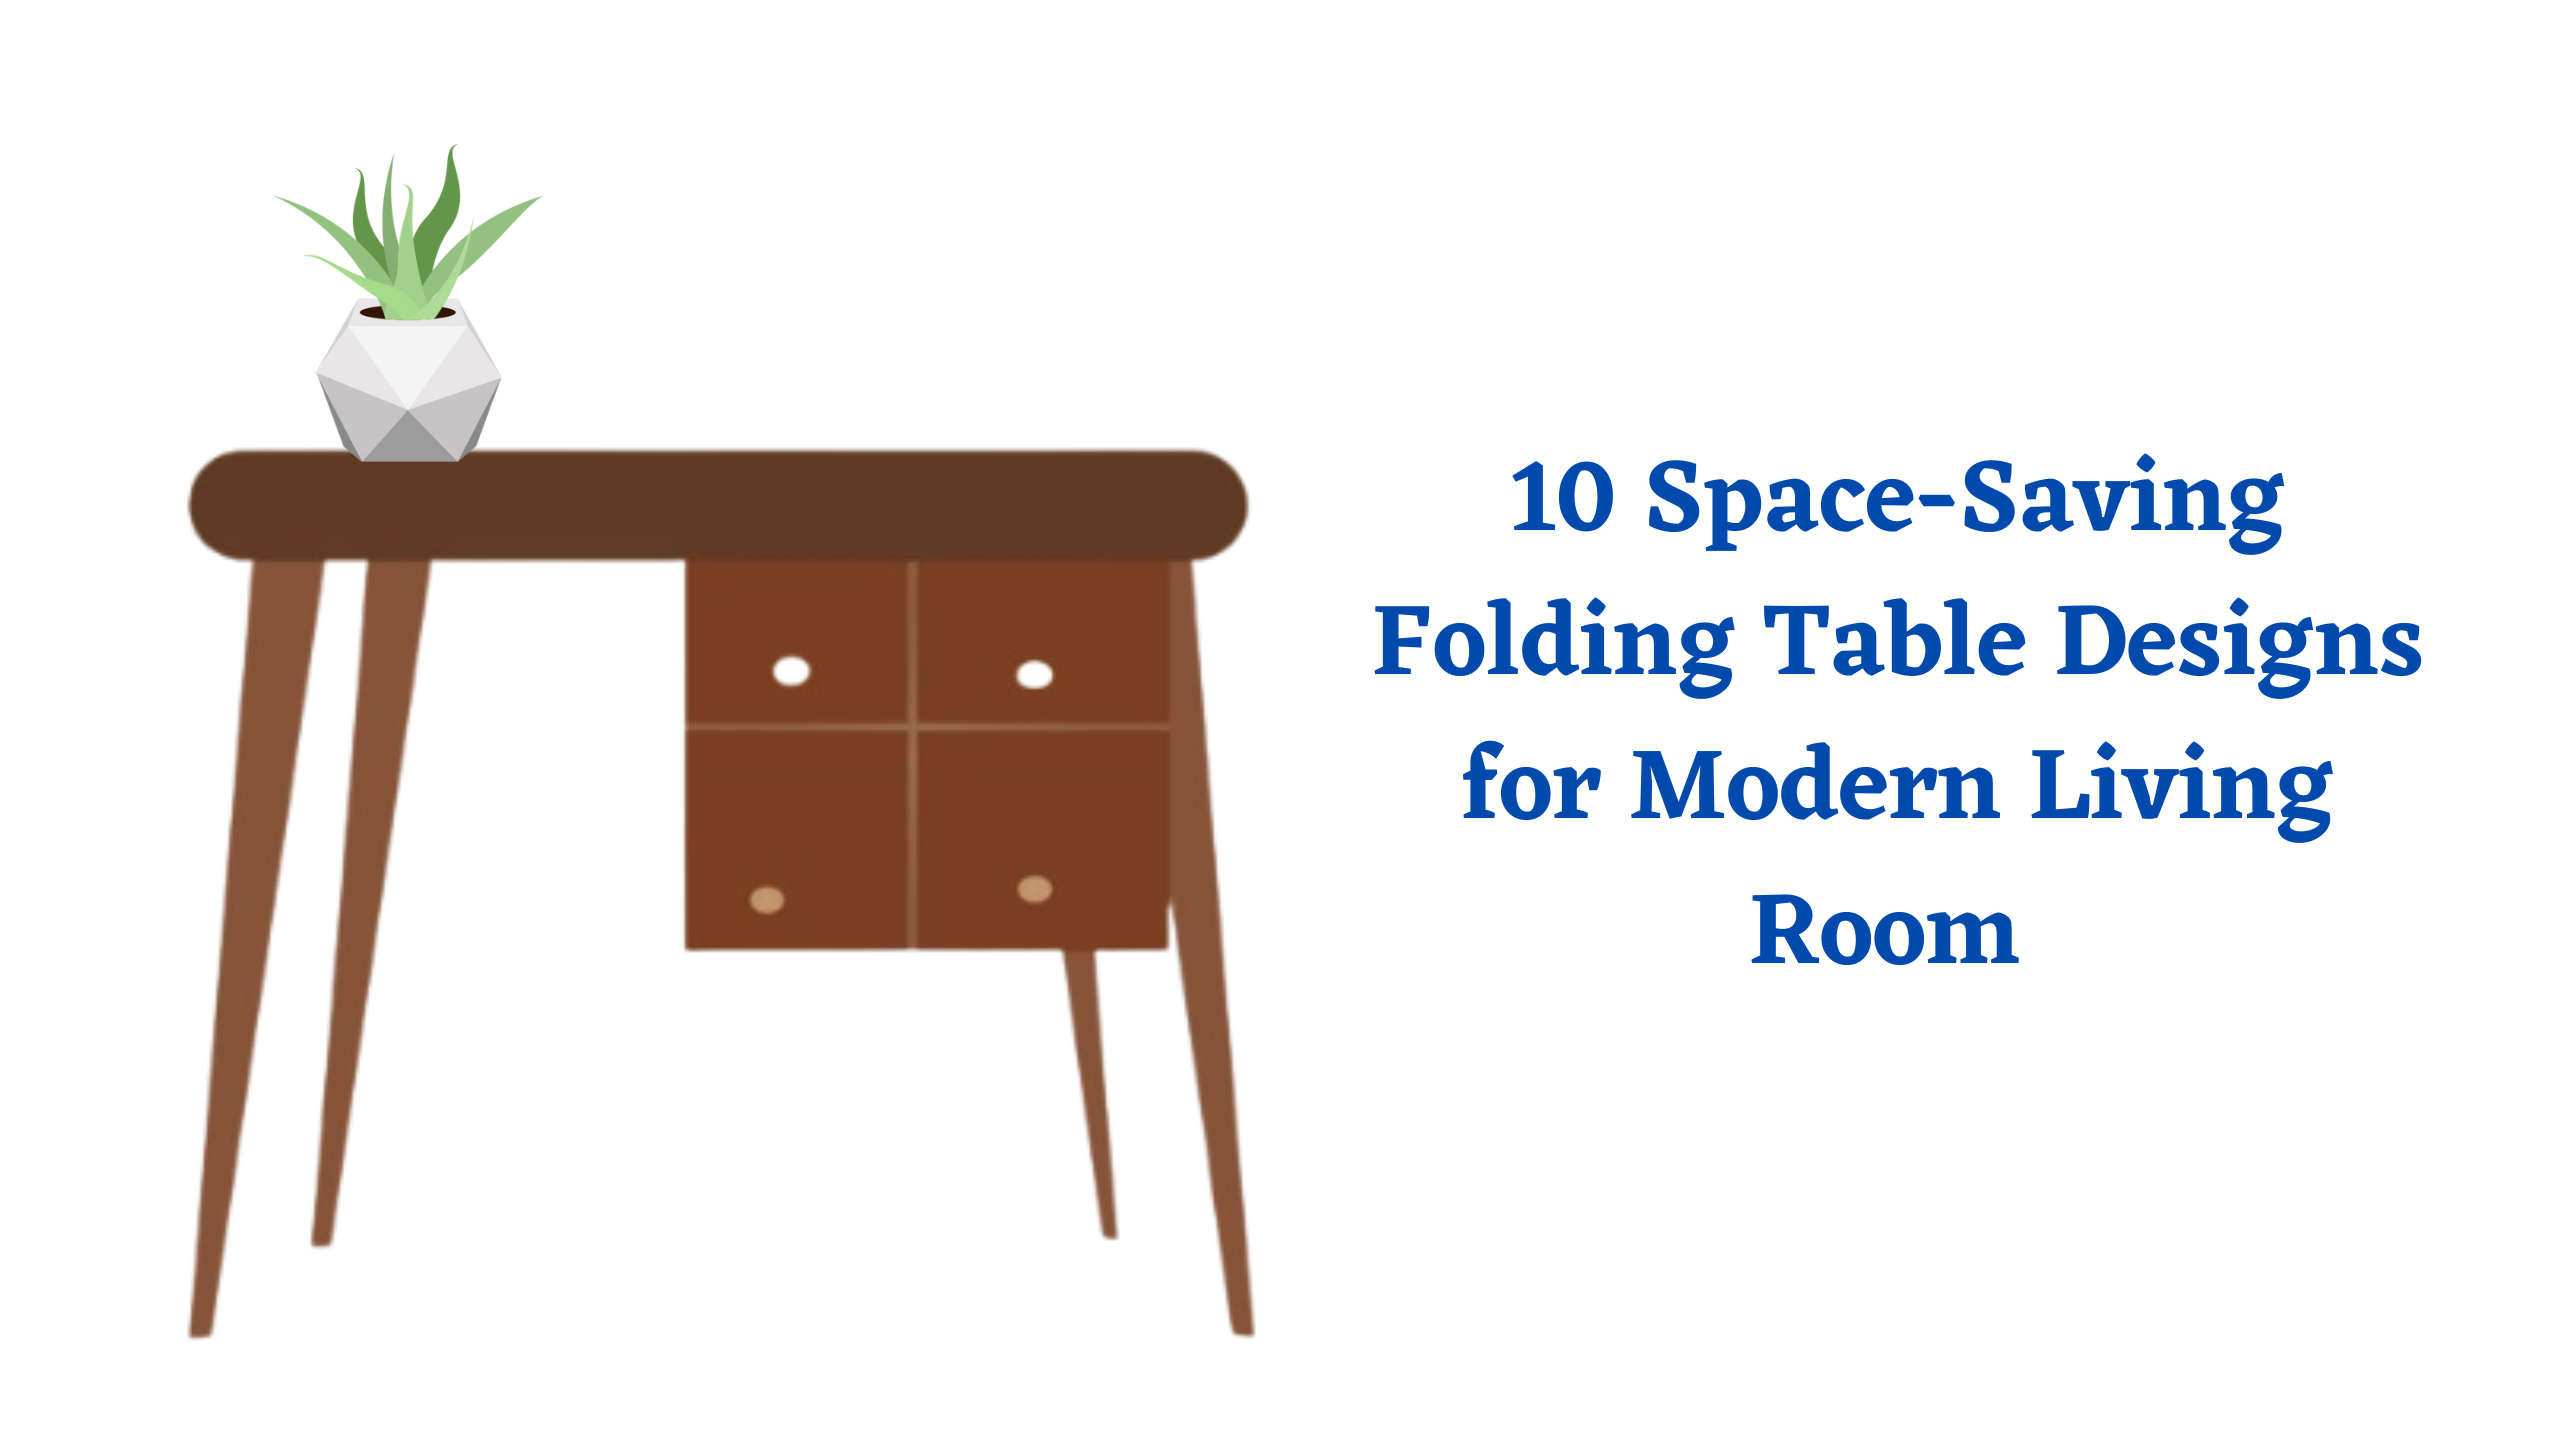 10 Space-Saving Folding Table Designs for Modern Living Room